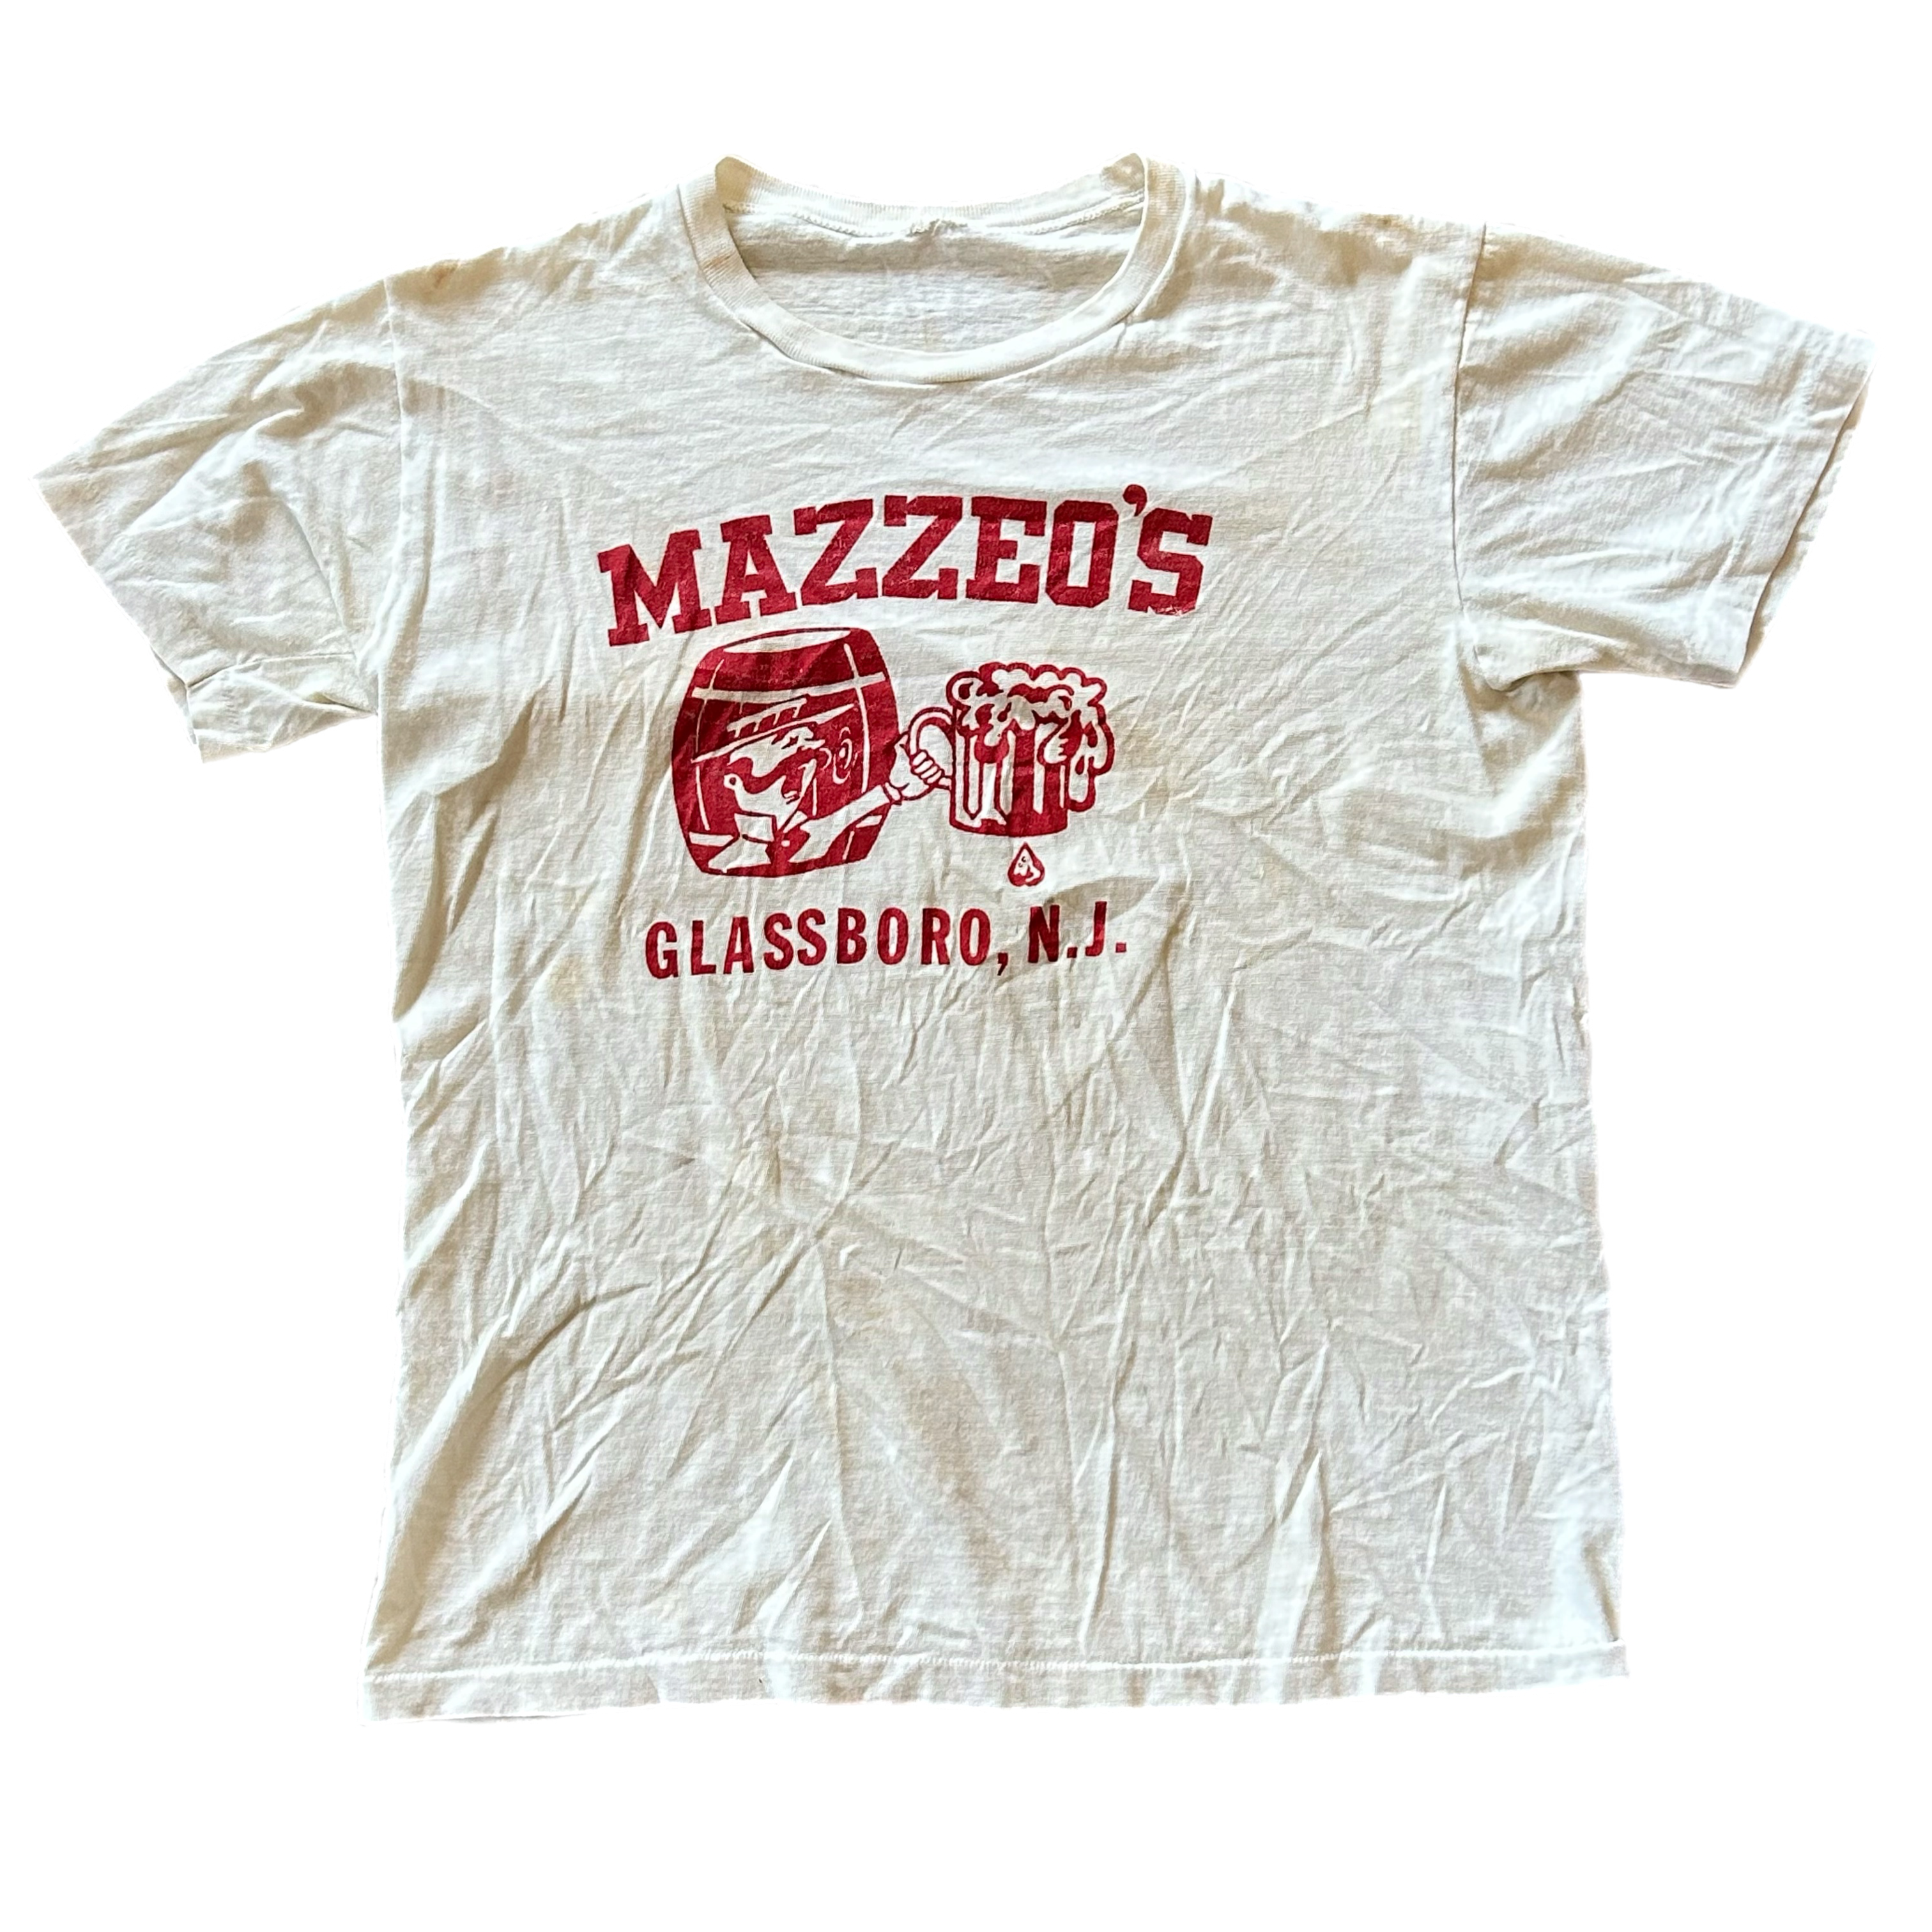 Vintage 1970s Mazzeo's Bar Tee